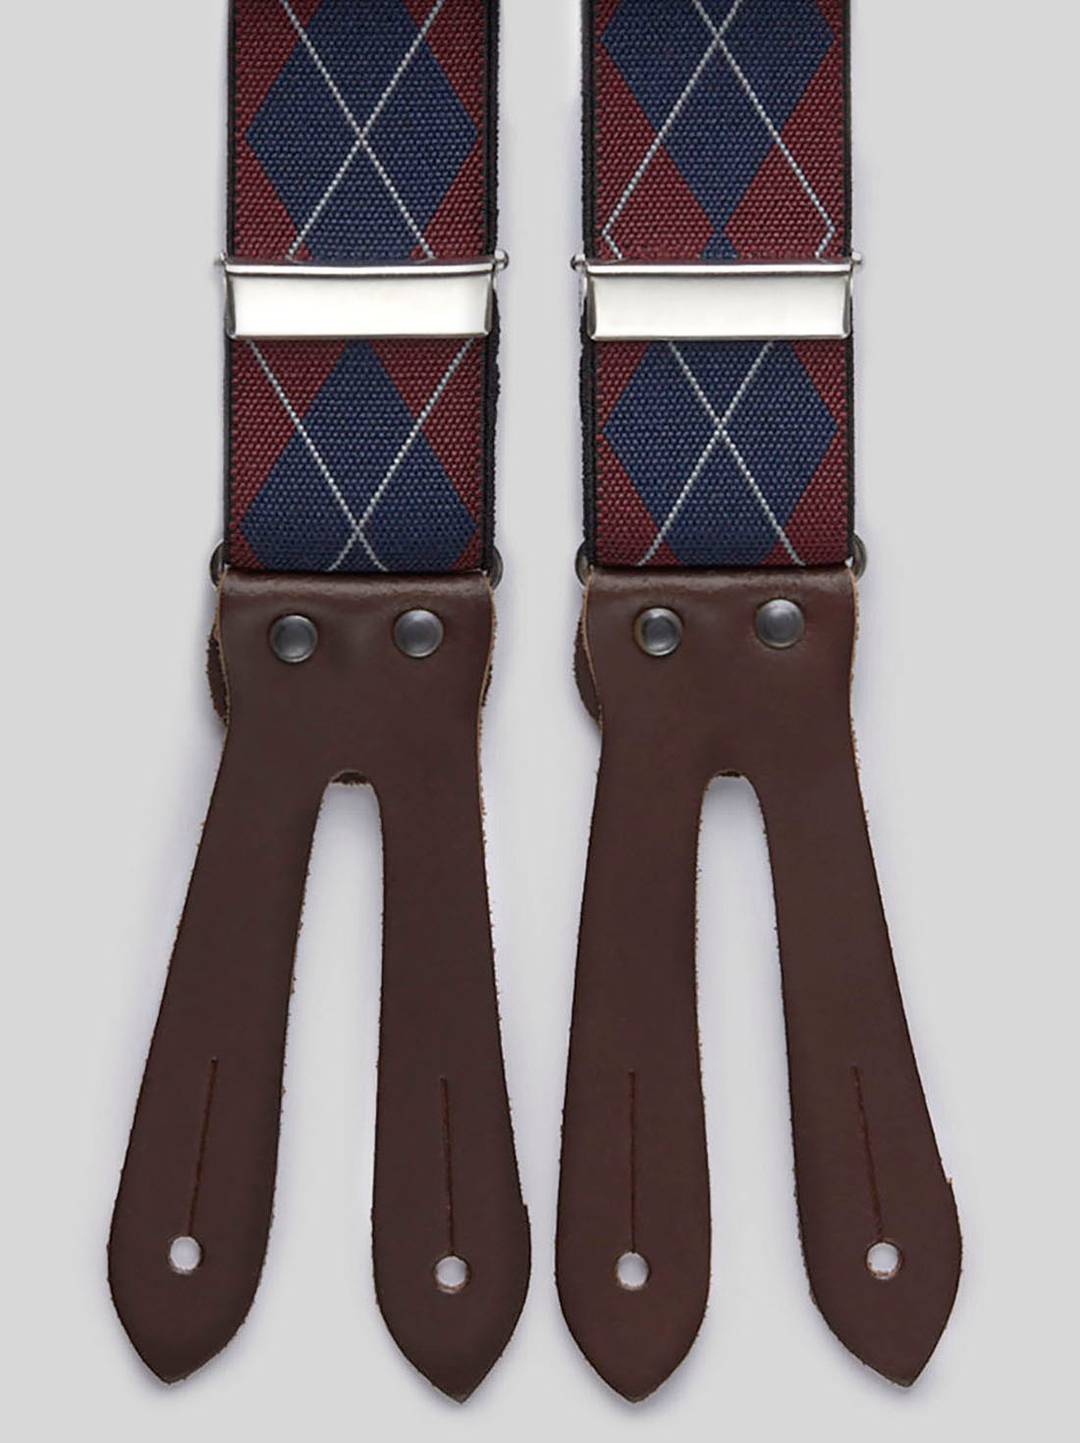 Leather Suspenders - Buy online